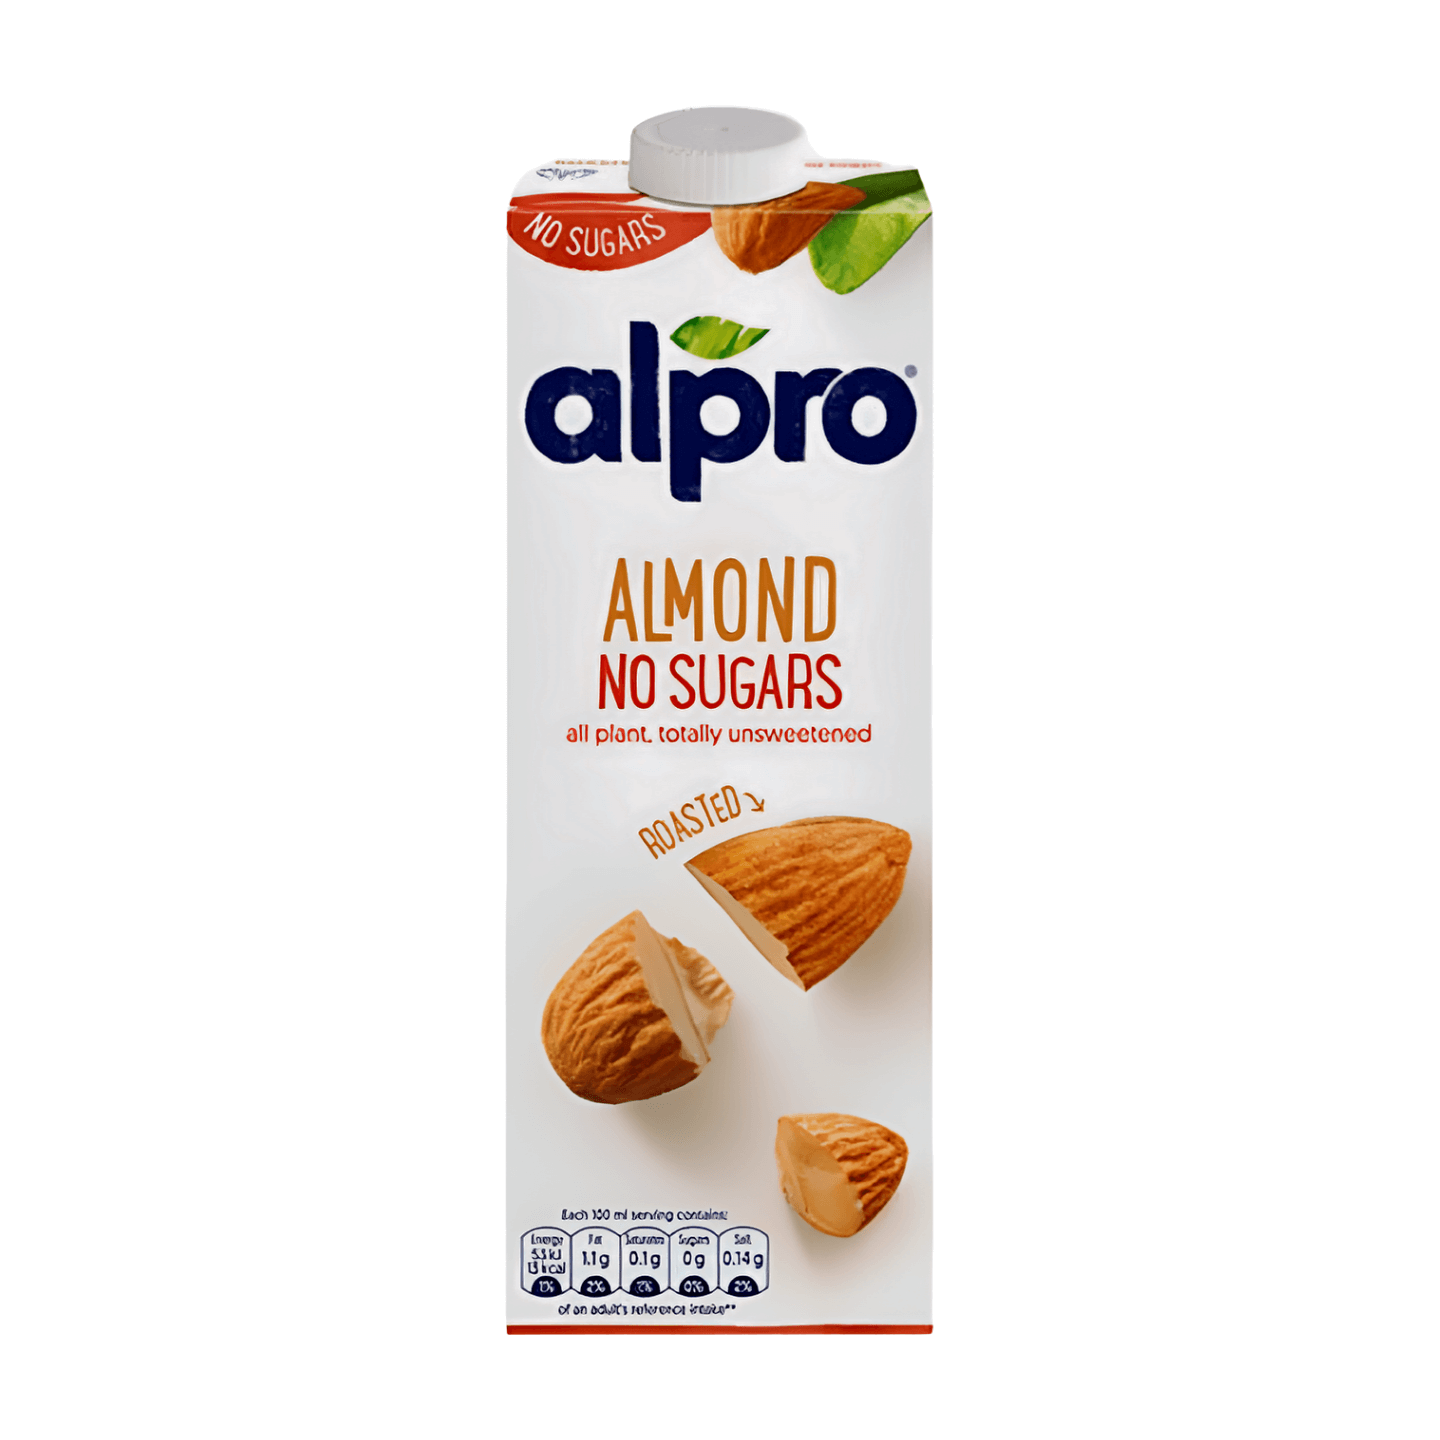 Alpro Almond Roasted No Sugars